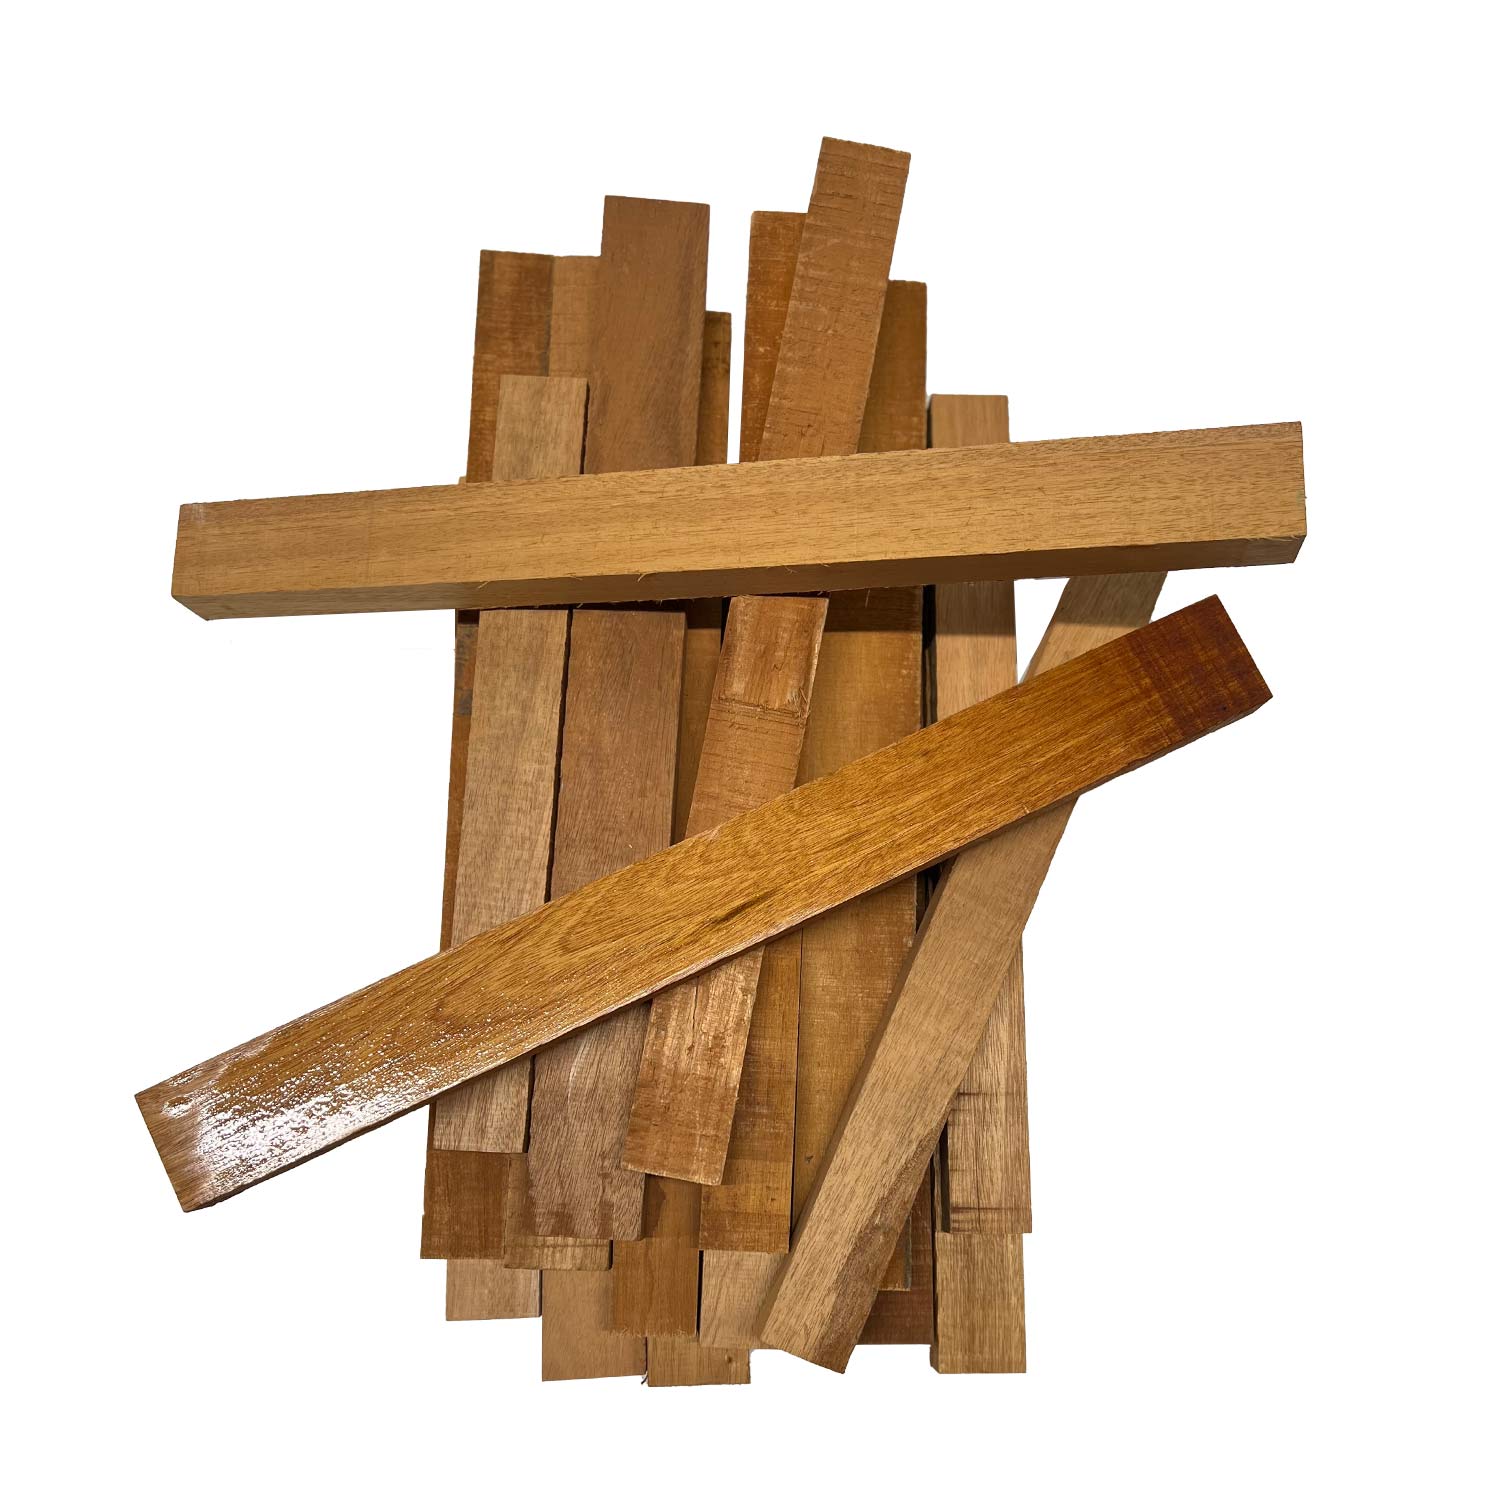 Honduran Mahogany Thin Stock Lumber Boards Wood Crafts 1 4 x 36 at MechanicSurplus.com EWZ2334S